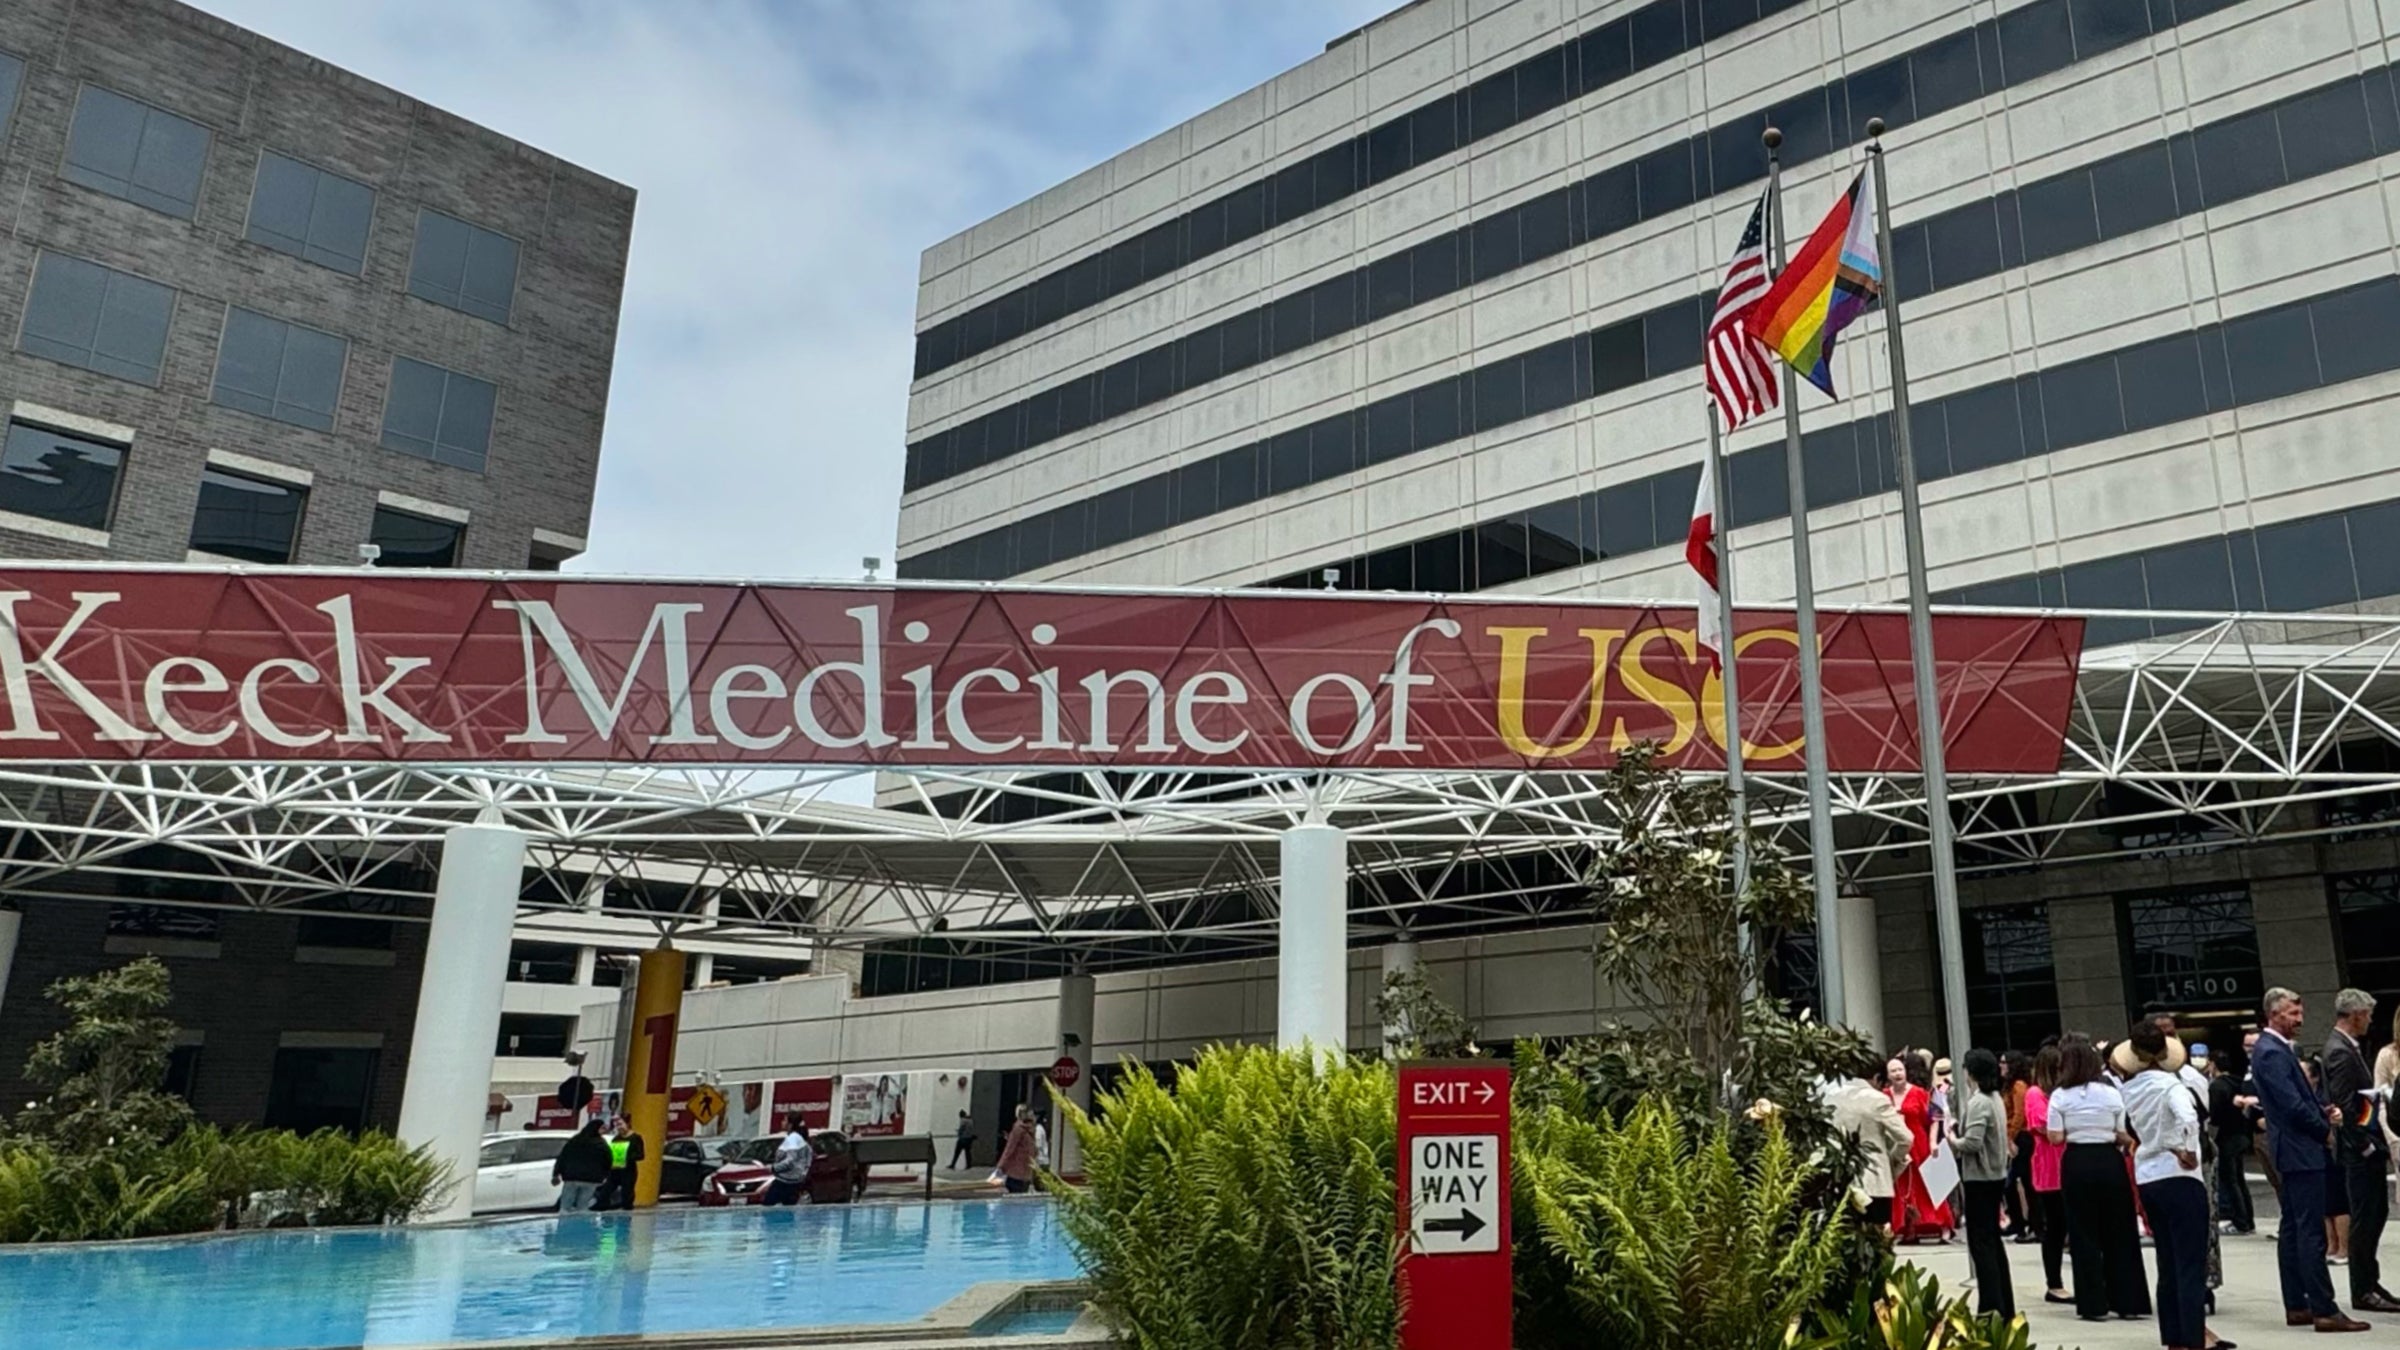 The pride progress flag is raised on the USC Health Sciences Campus. (Photo/Victoria Mendoza)